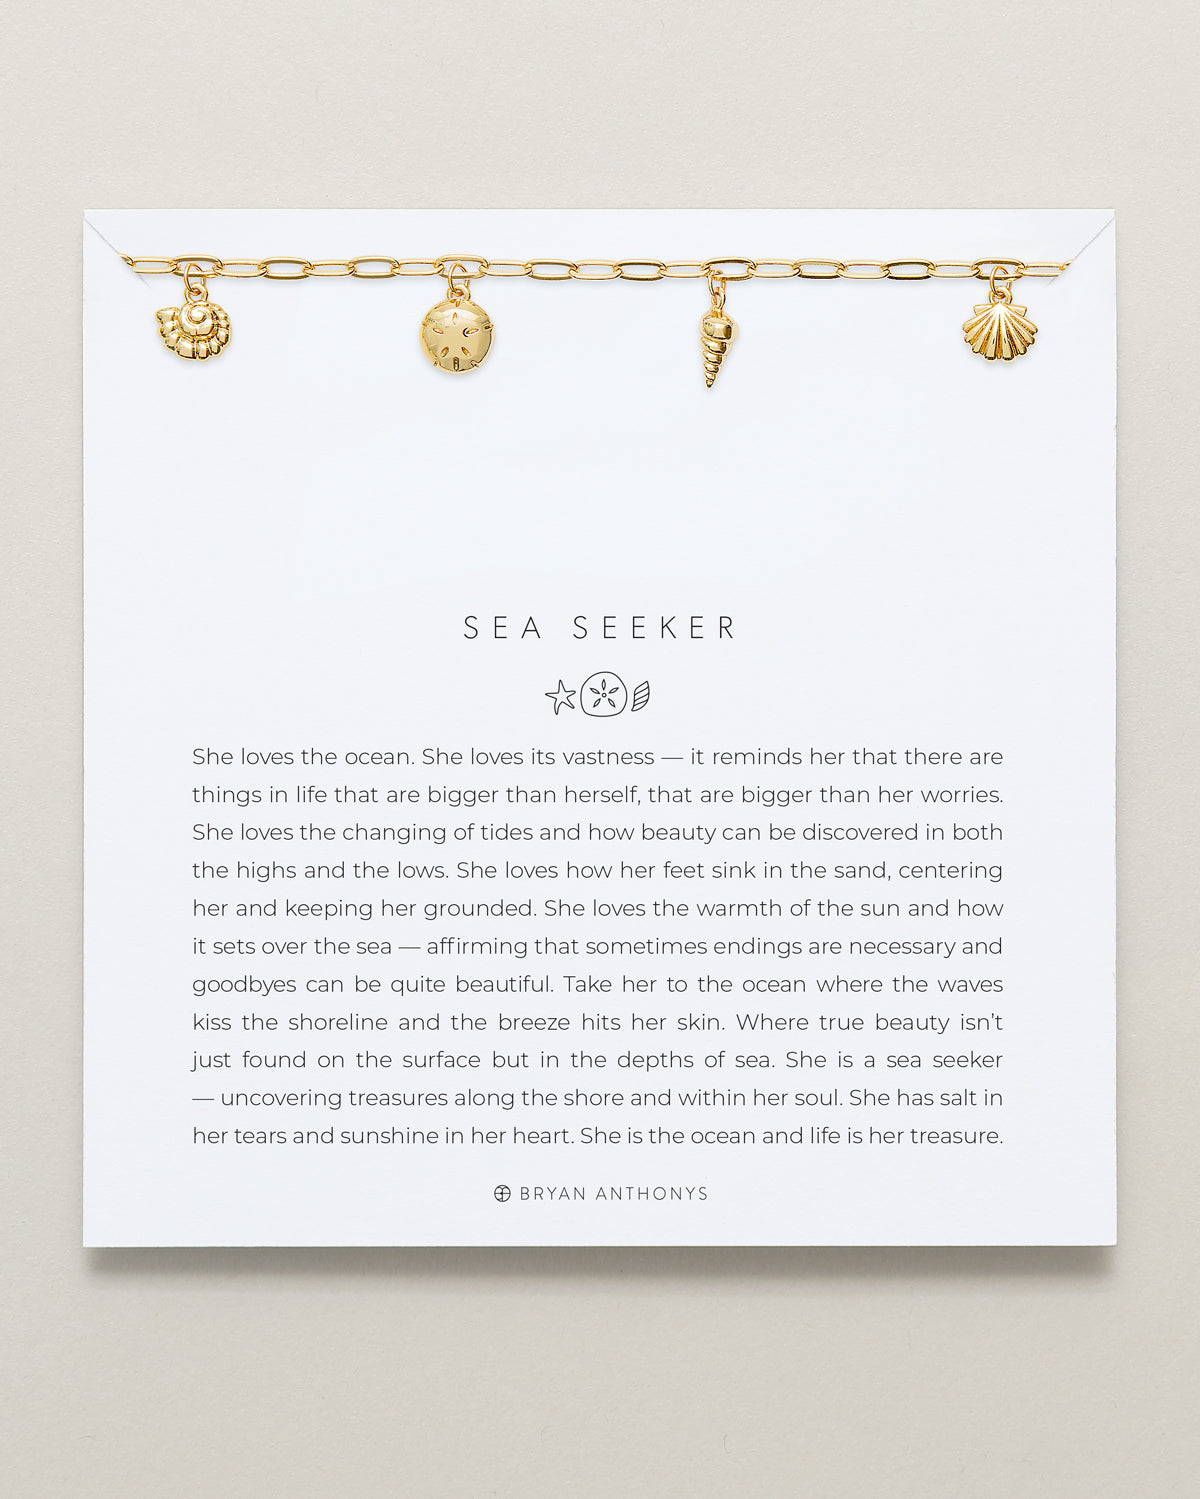 Bryan Anthonys Gold Sea Seeker Charm Bracelet On Card